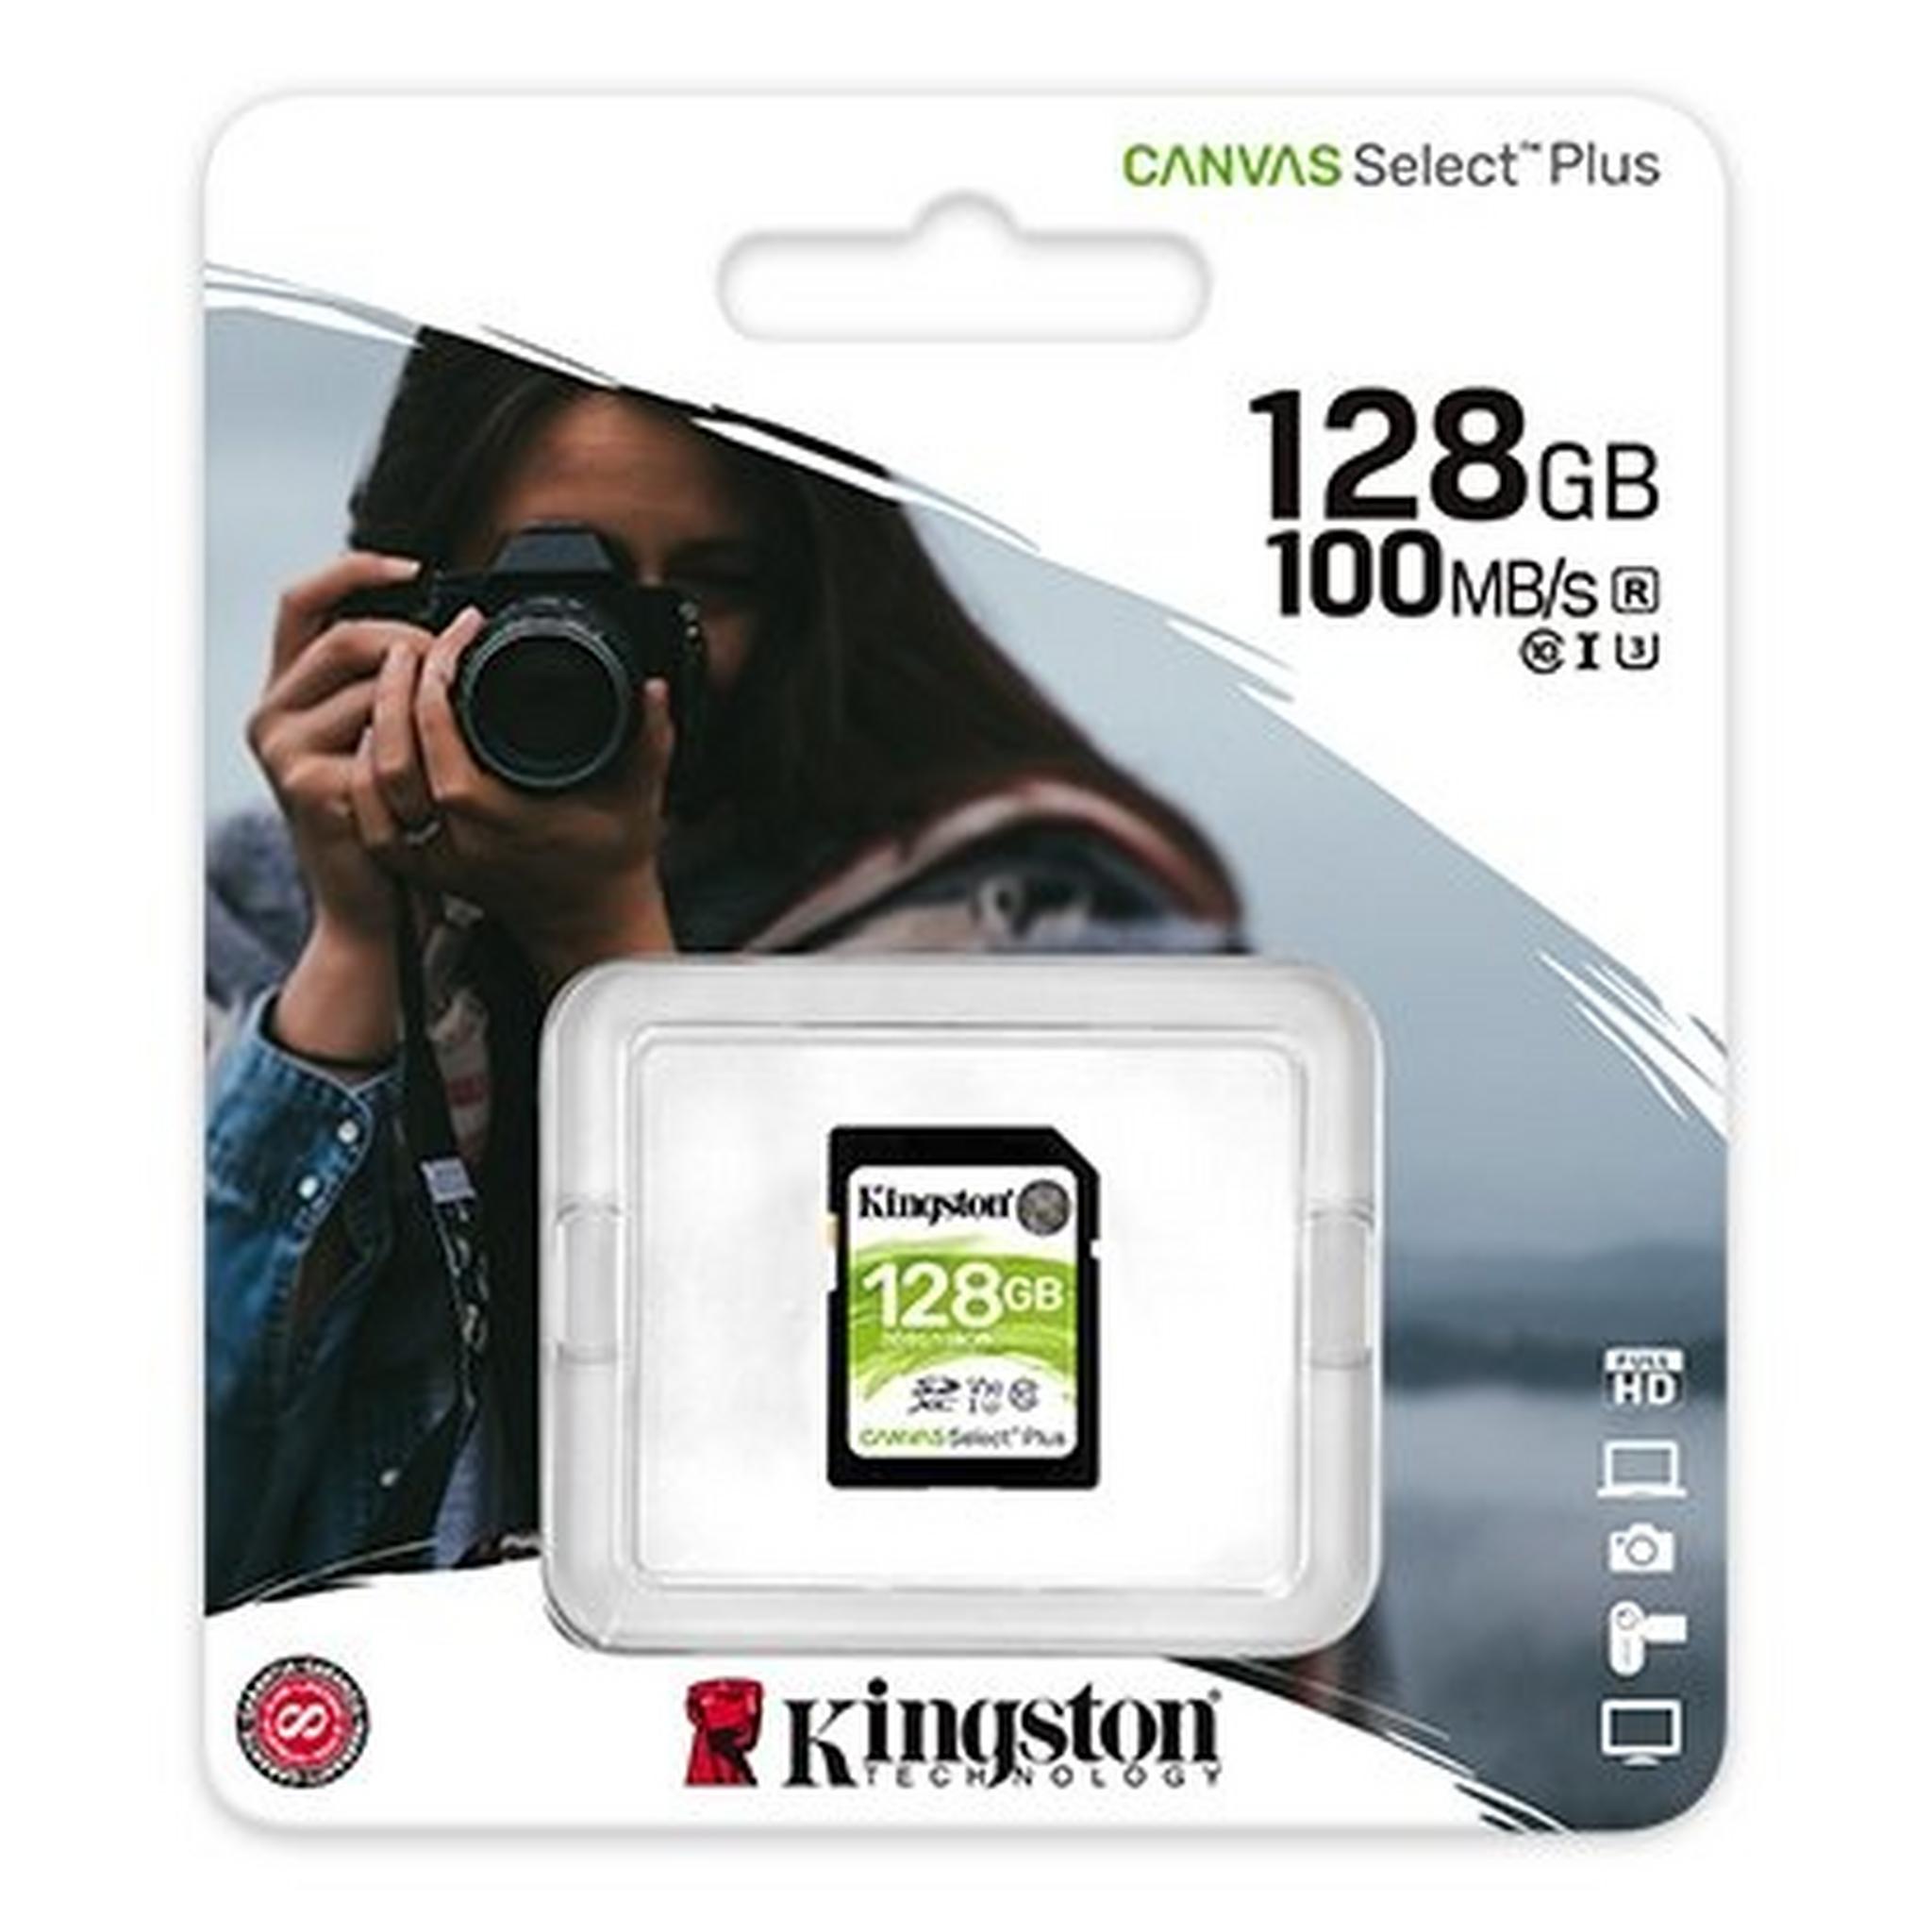 Kingston Canvas Select Memory Card 128GB SDXC UHS-I Plus SD Card